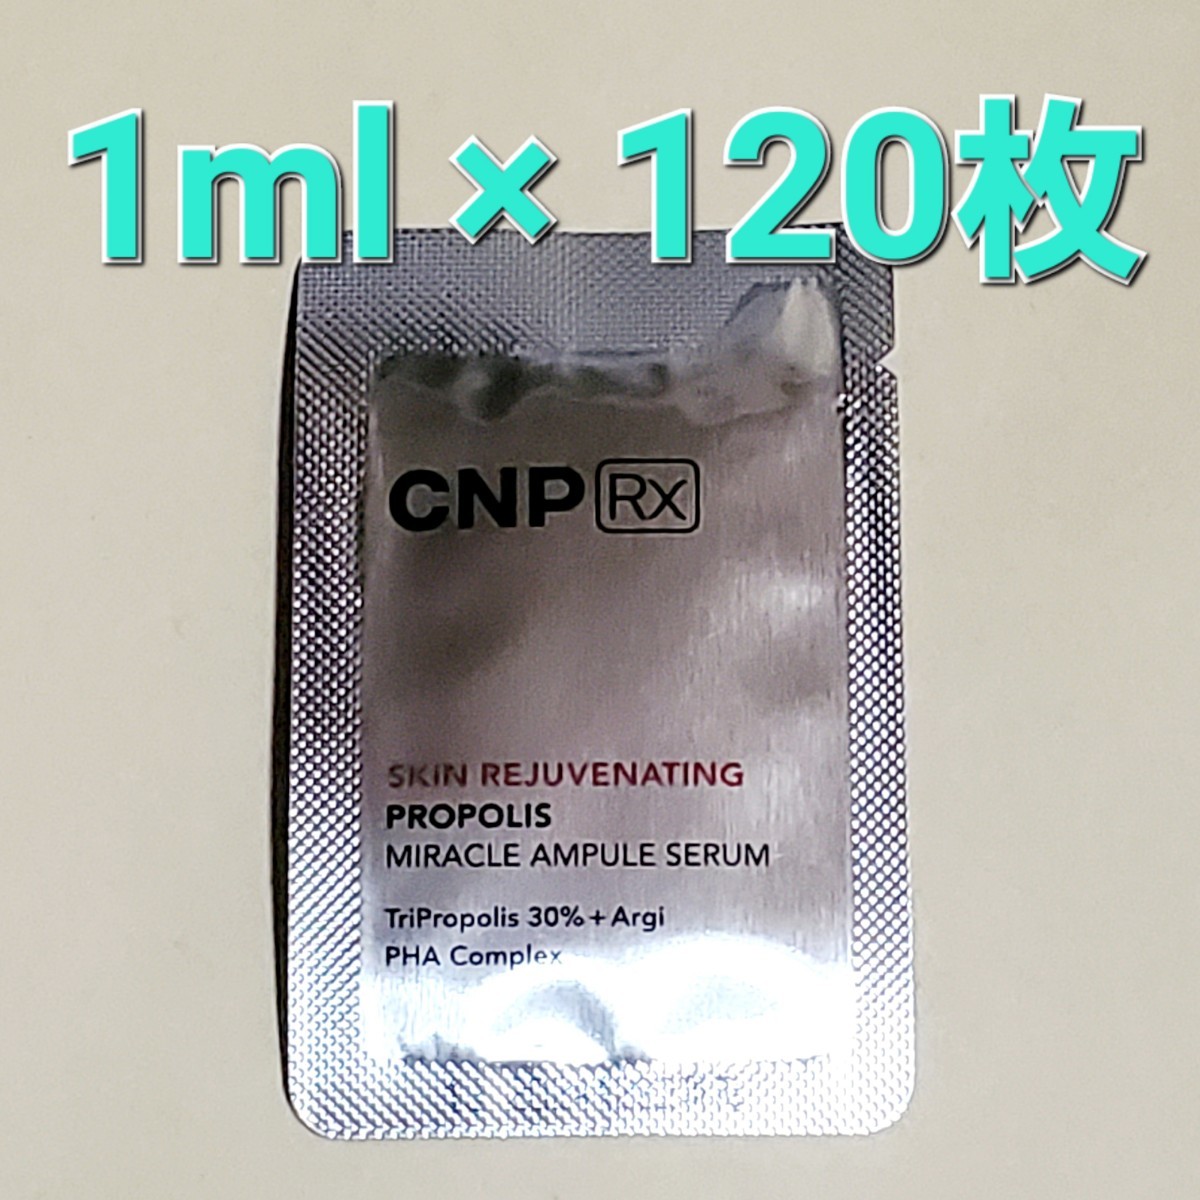 CNP RX チャアンドパク スキン リジューヴィネイティング プロポリス ミラクル アンプル セラム 1ml 120枚 (120ml)_画像1